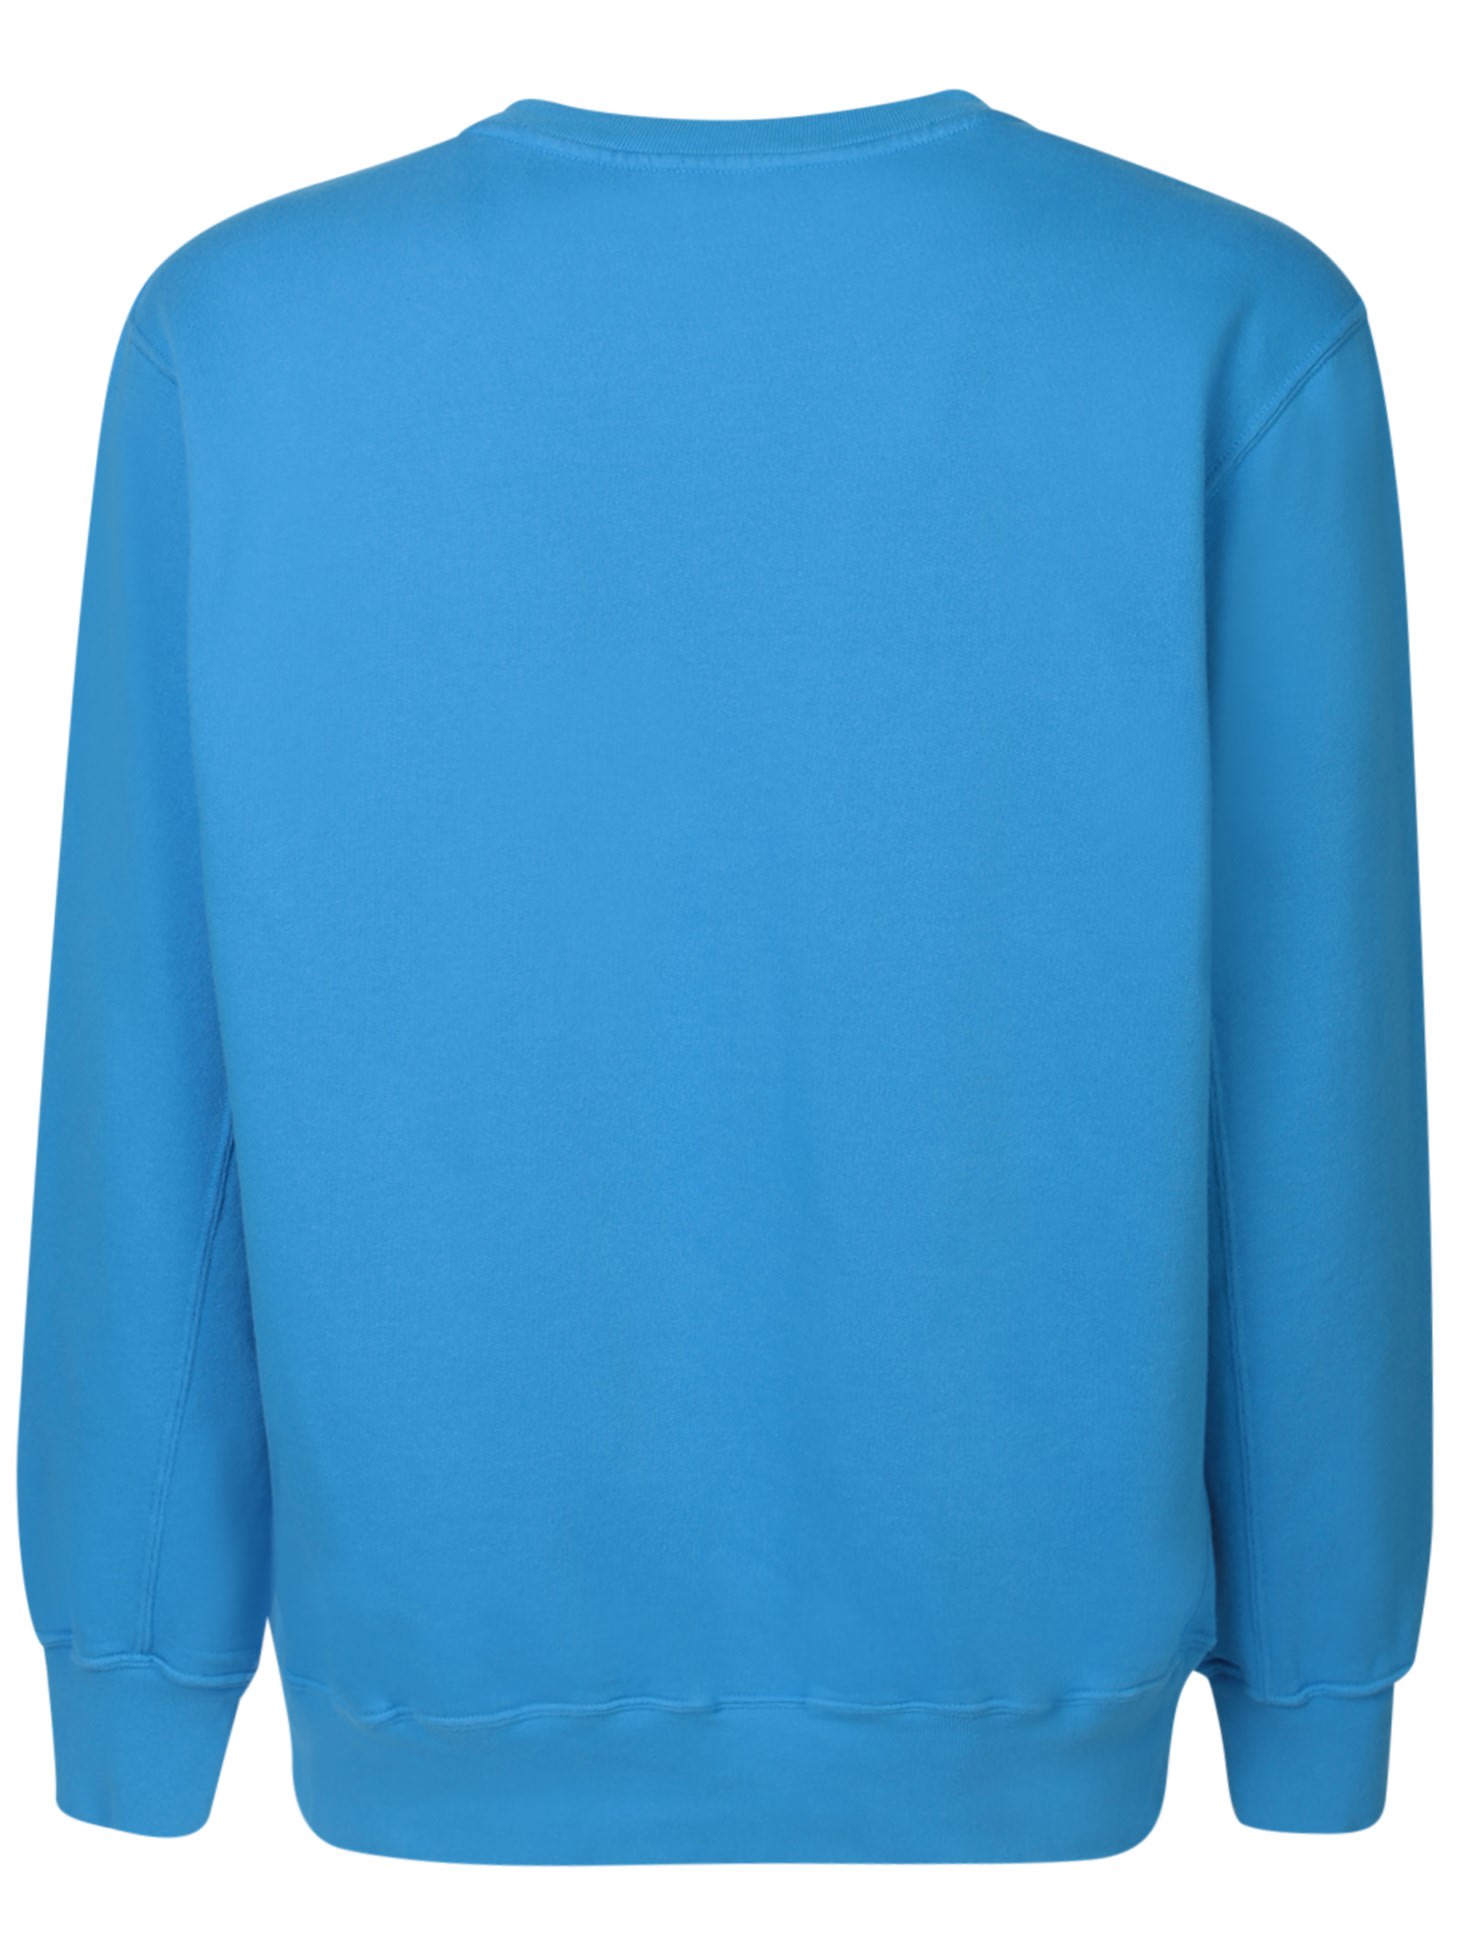 Shop Autry Embroidered Logo Cobalt Blue Sweatshirt